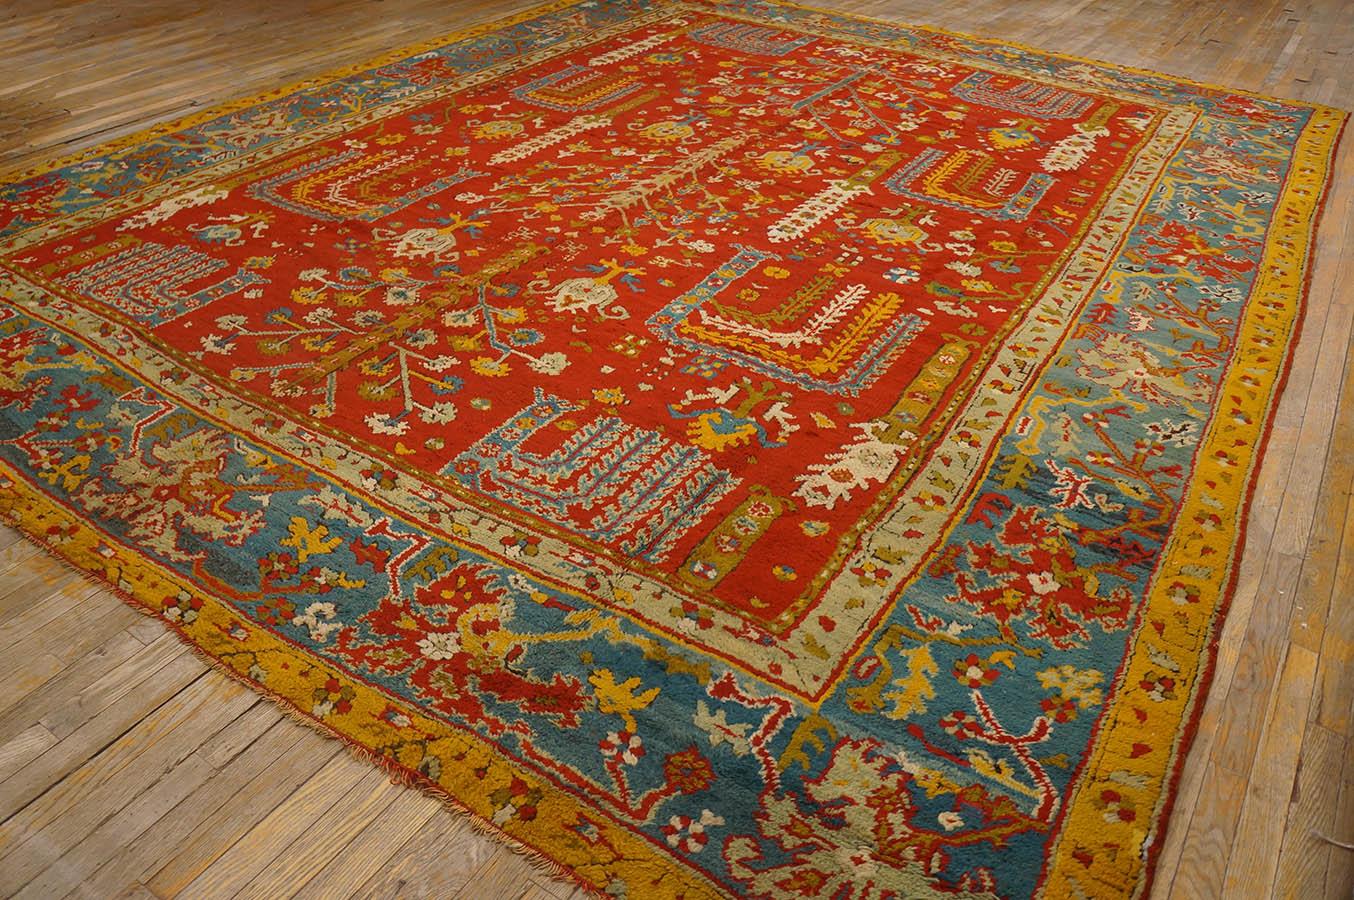 Late 19th Century Turkish Oushak Carpet  ( 11' 5'' x 14' 6'' - 348 x 442 cm ) For Sale 9